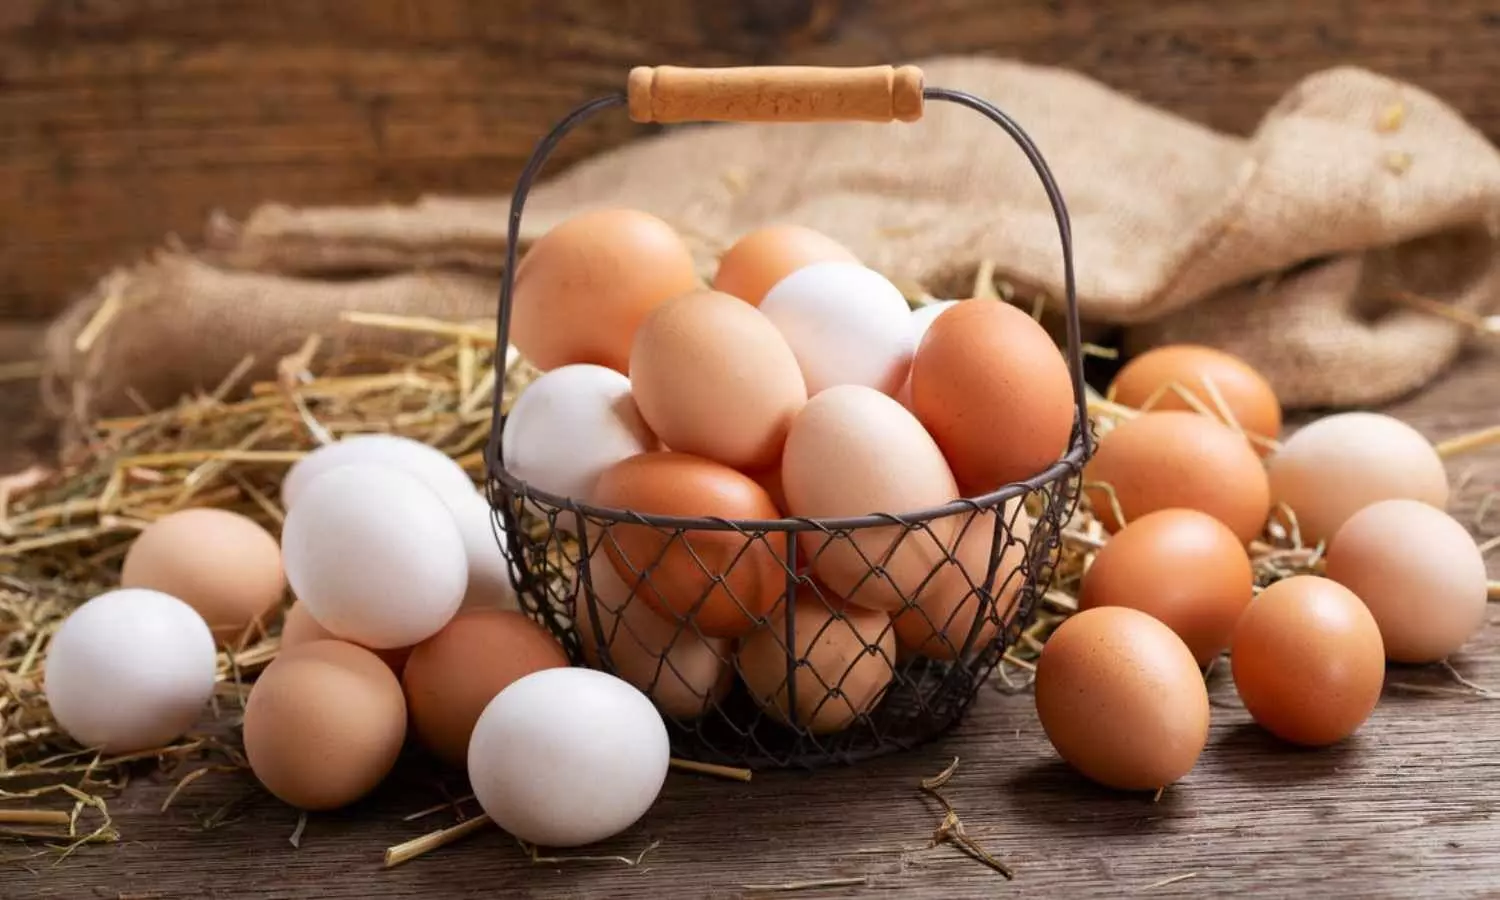 Brown egg health benefits